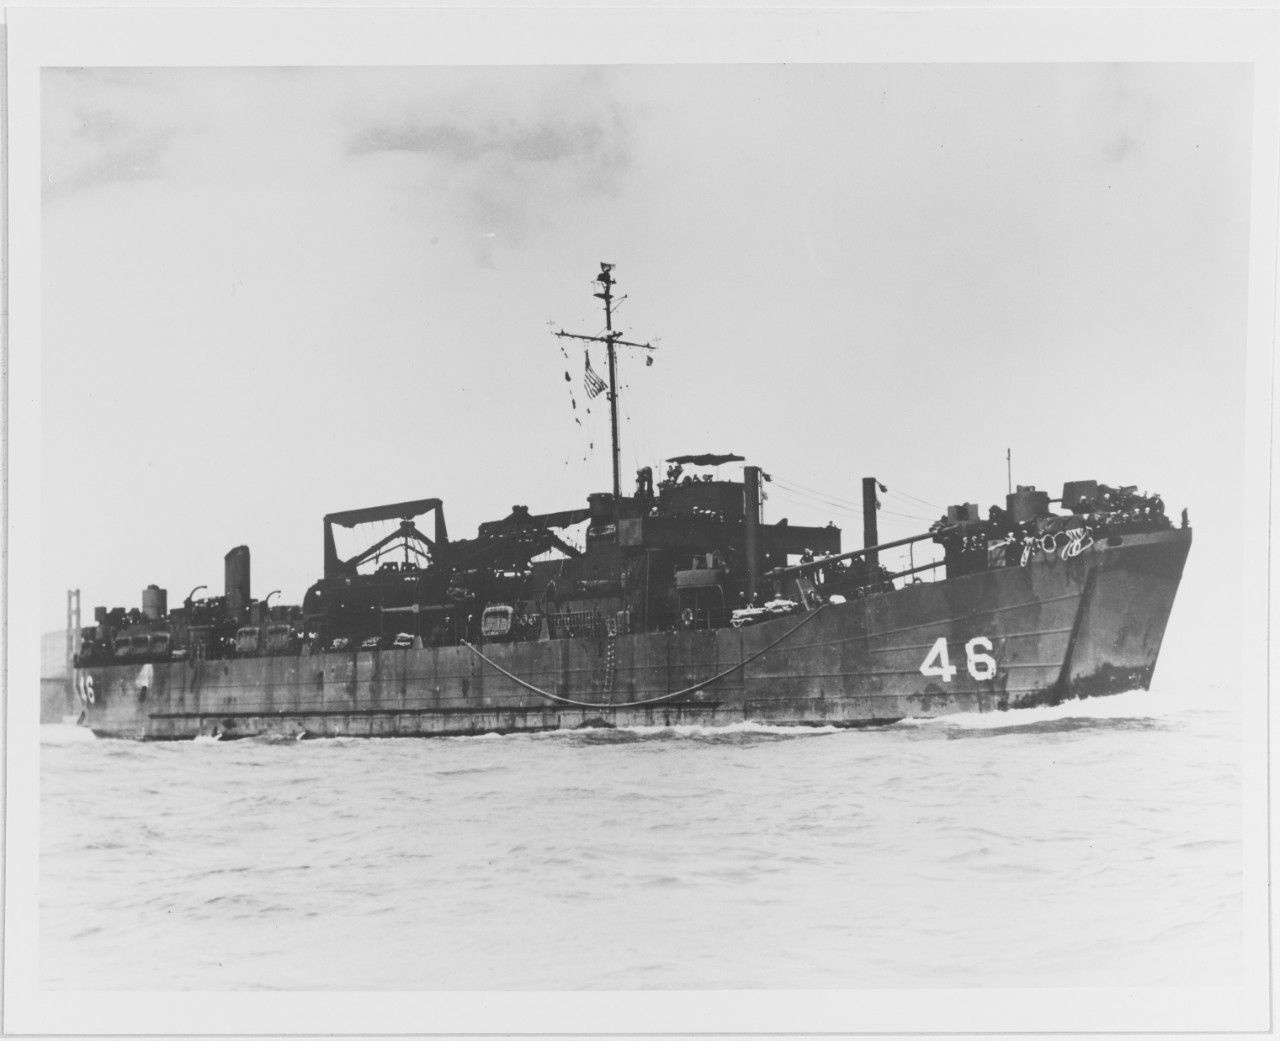 USS DORCHESTER (APB-46)